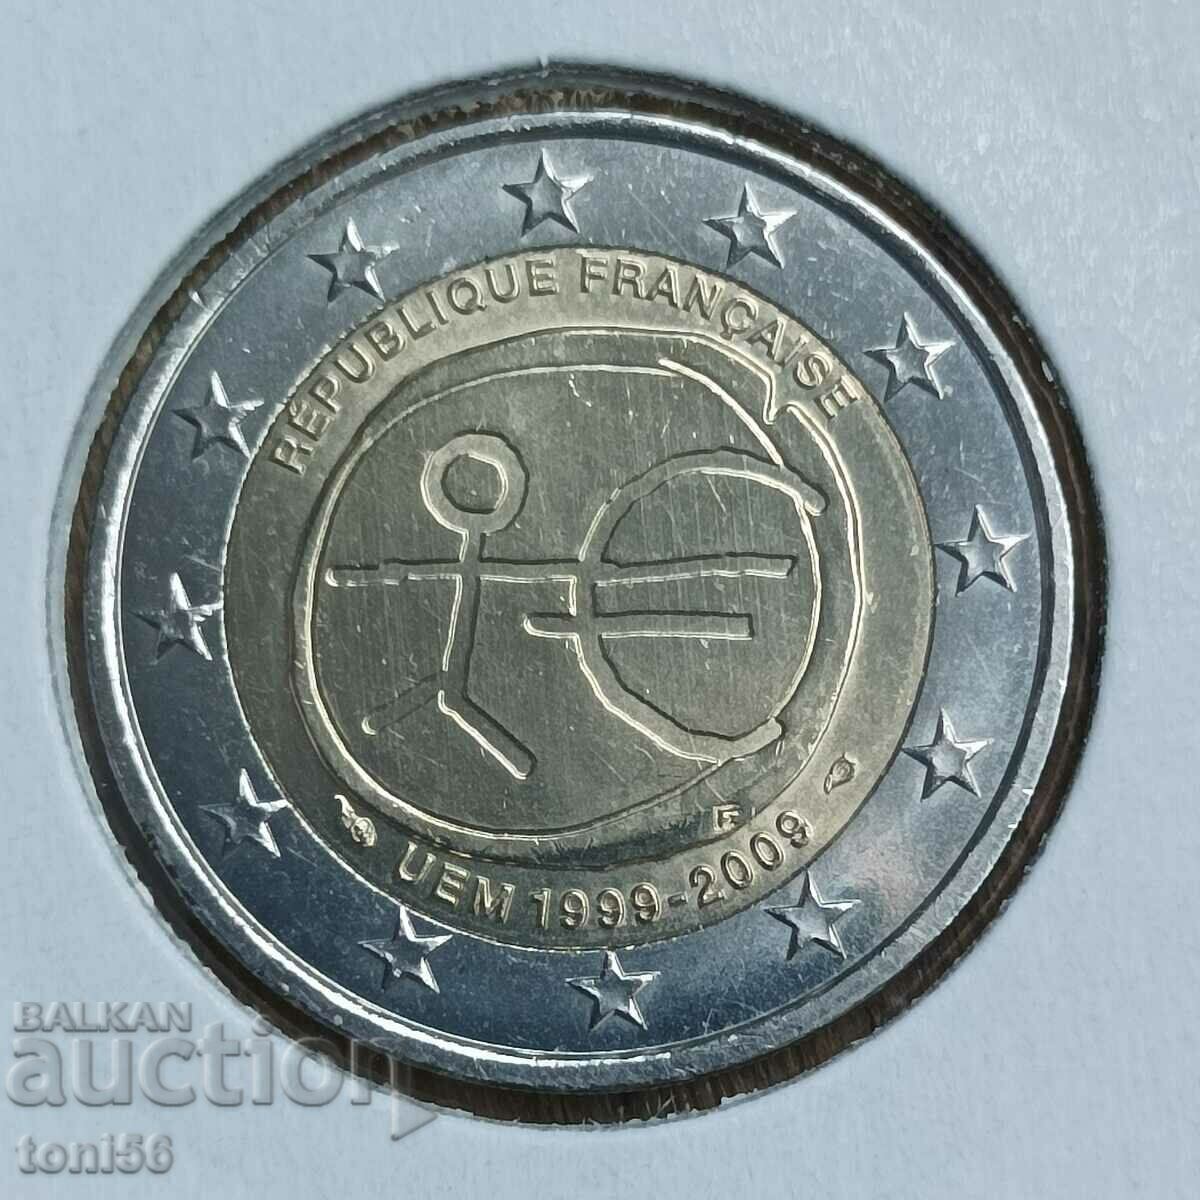 France 2 euro 2009 - 10 "Economic Union"